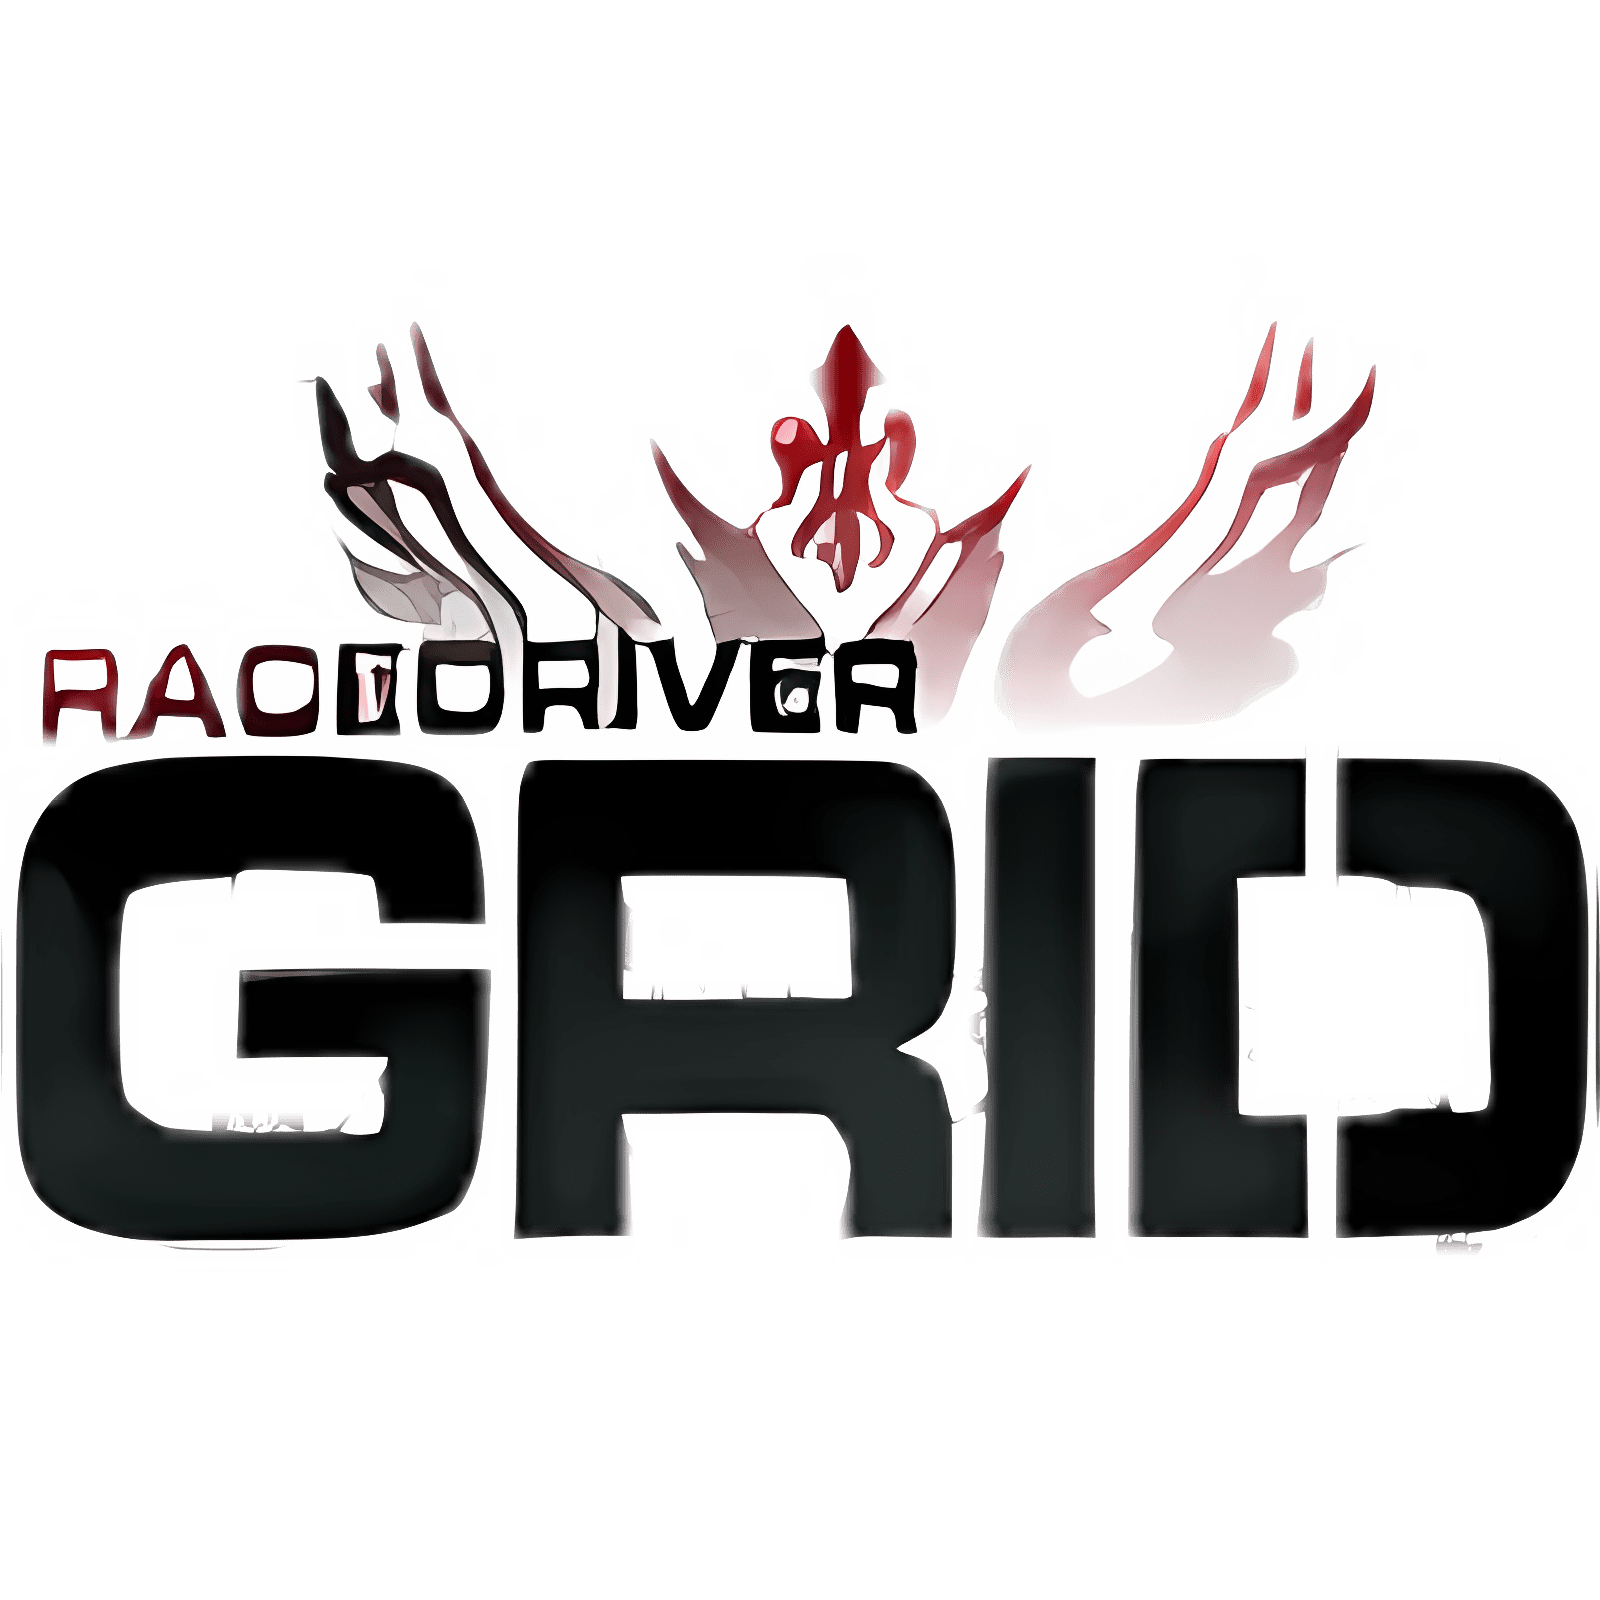 race driver grid teammate